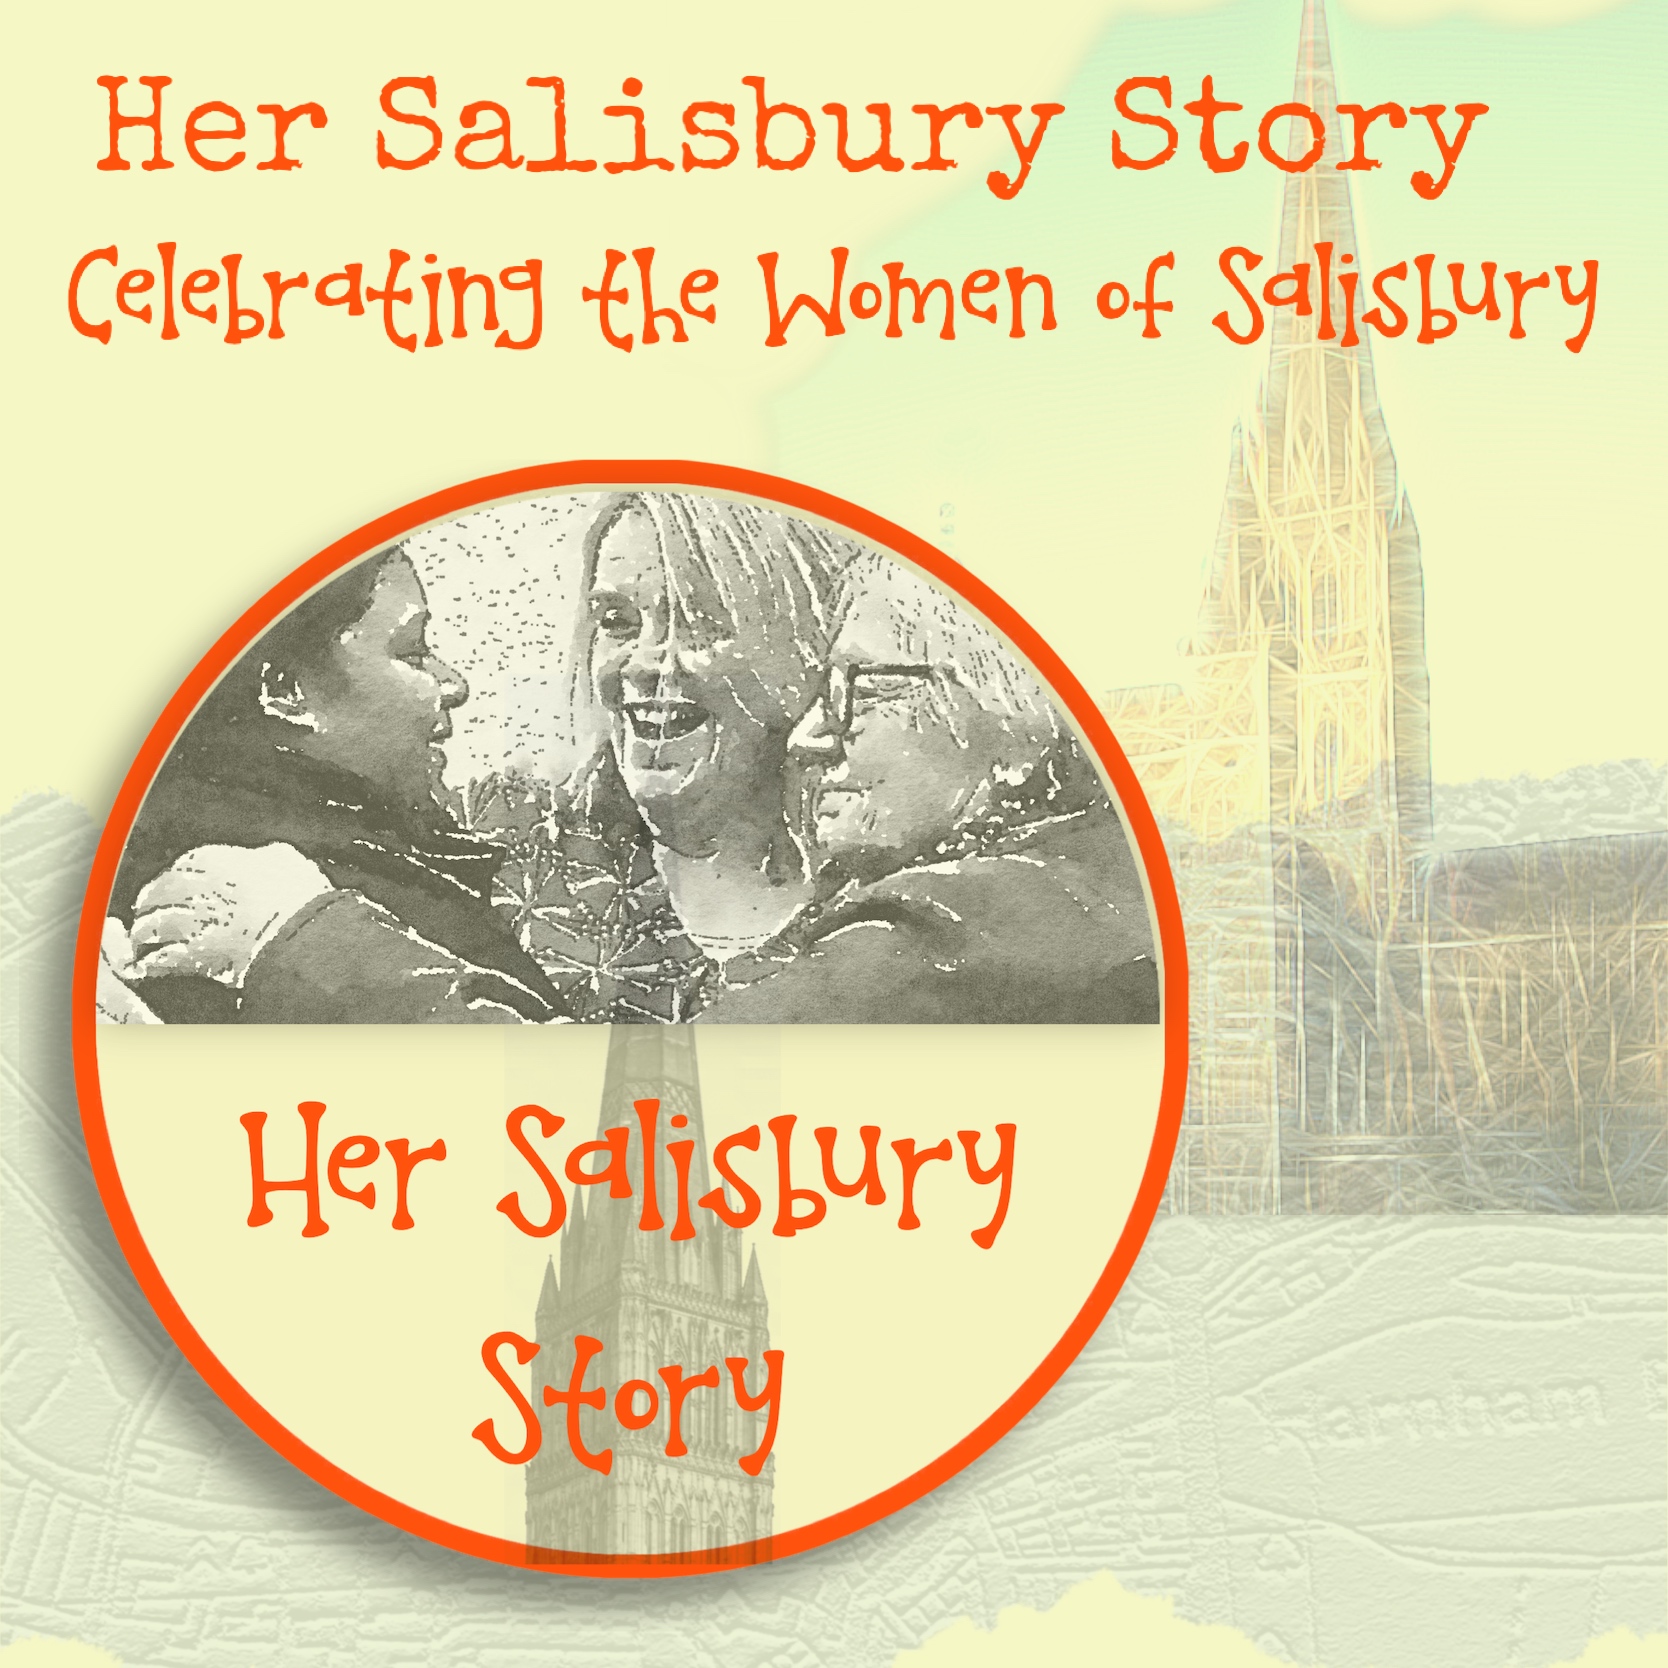 Her Salisbury Story logo and background